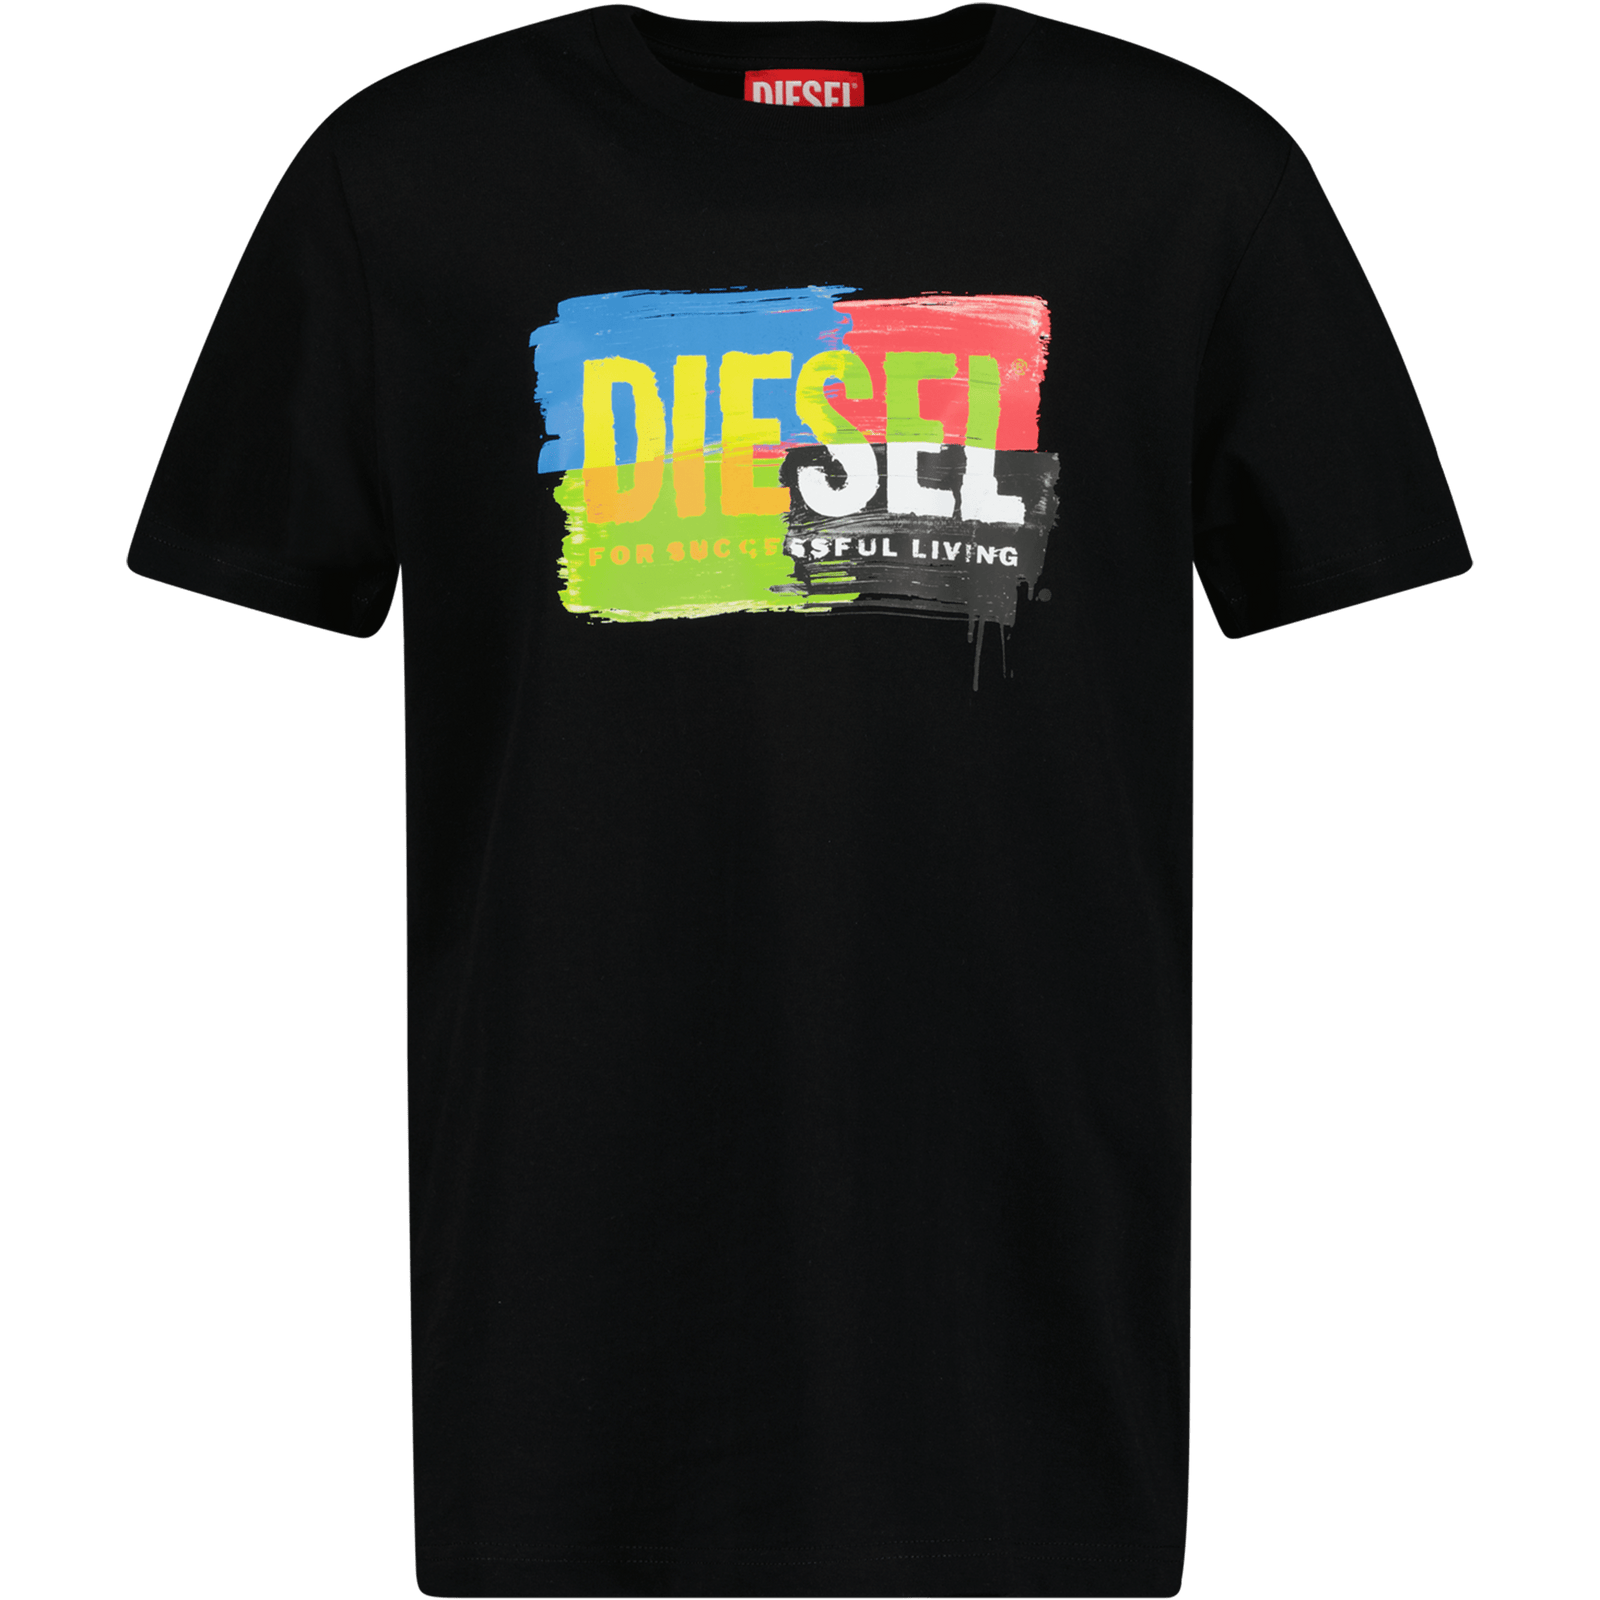 Diesel Kids Boys T-Shirt Black